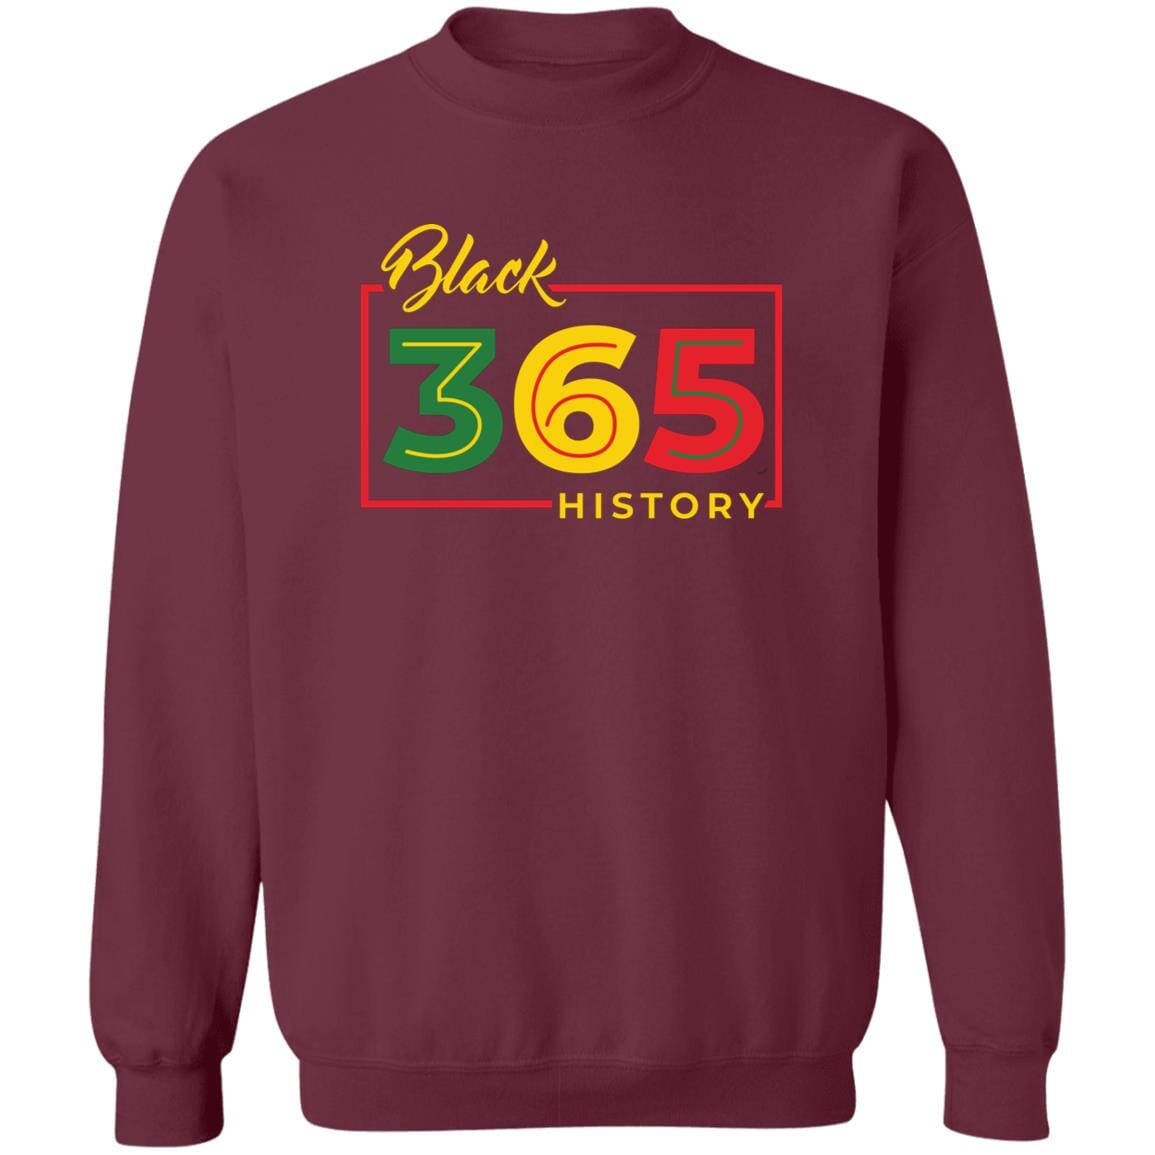 Black History 365 T-shirt Apparel Gearment Crewneck Sweatshirt Maroon S